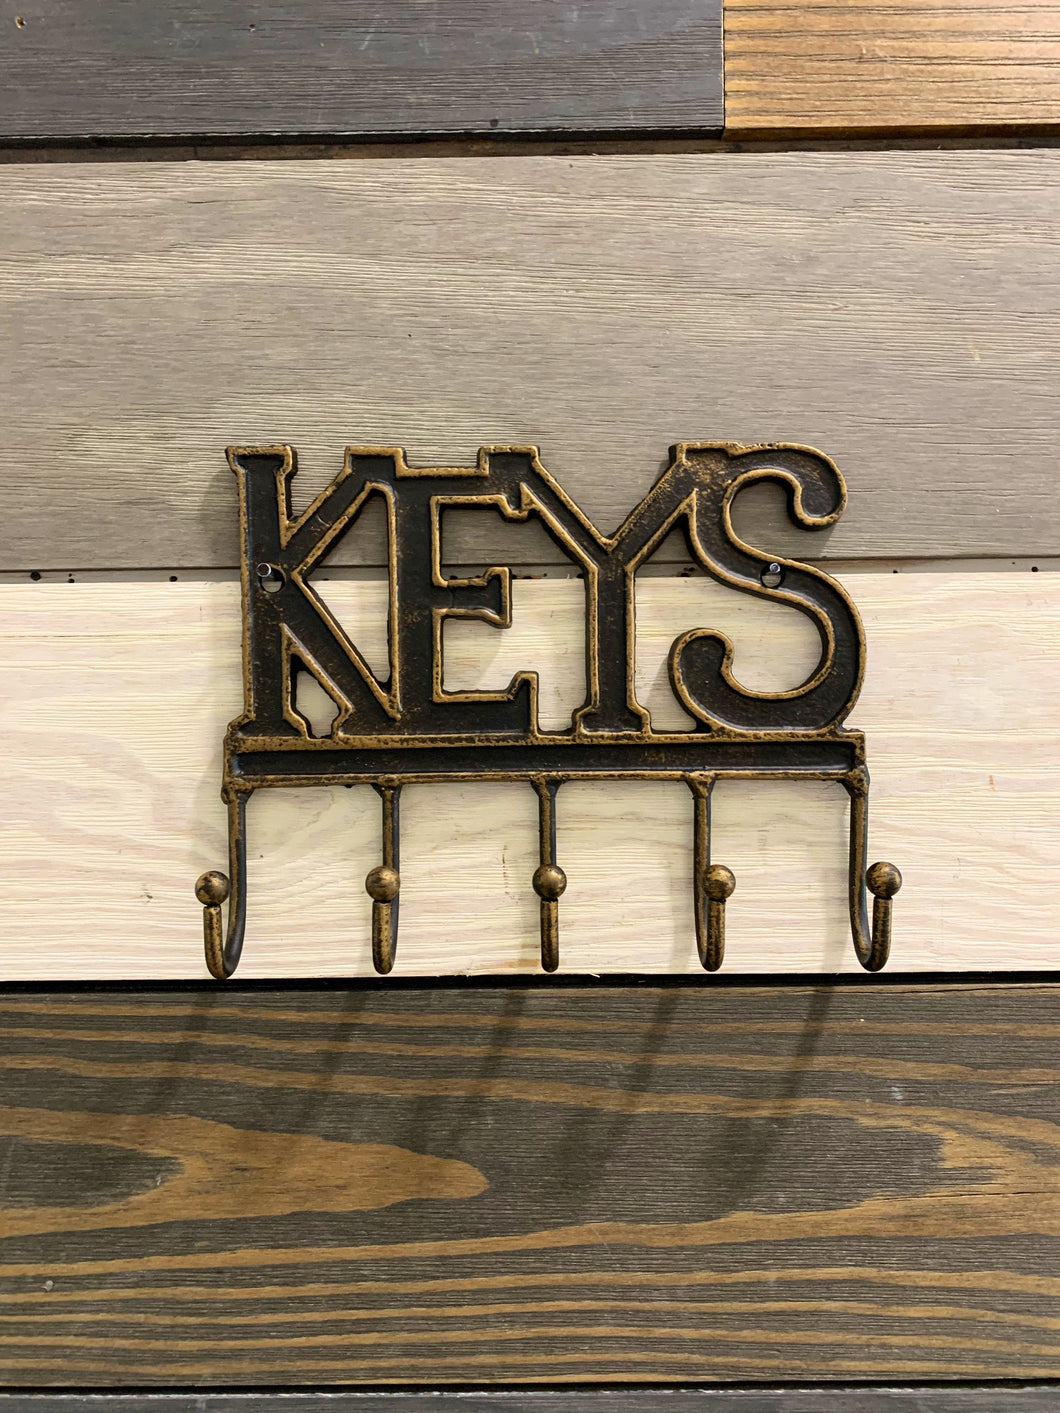 Keys Wall Decor With Hooks, Wall Decor, Key Metal Wall Hook, Vintage Wall Hanging Hook, Cast Iron Keys Hook, Keys Wall Decor With 4 Hooks